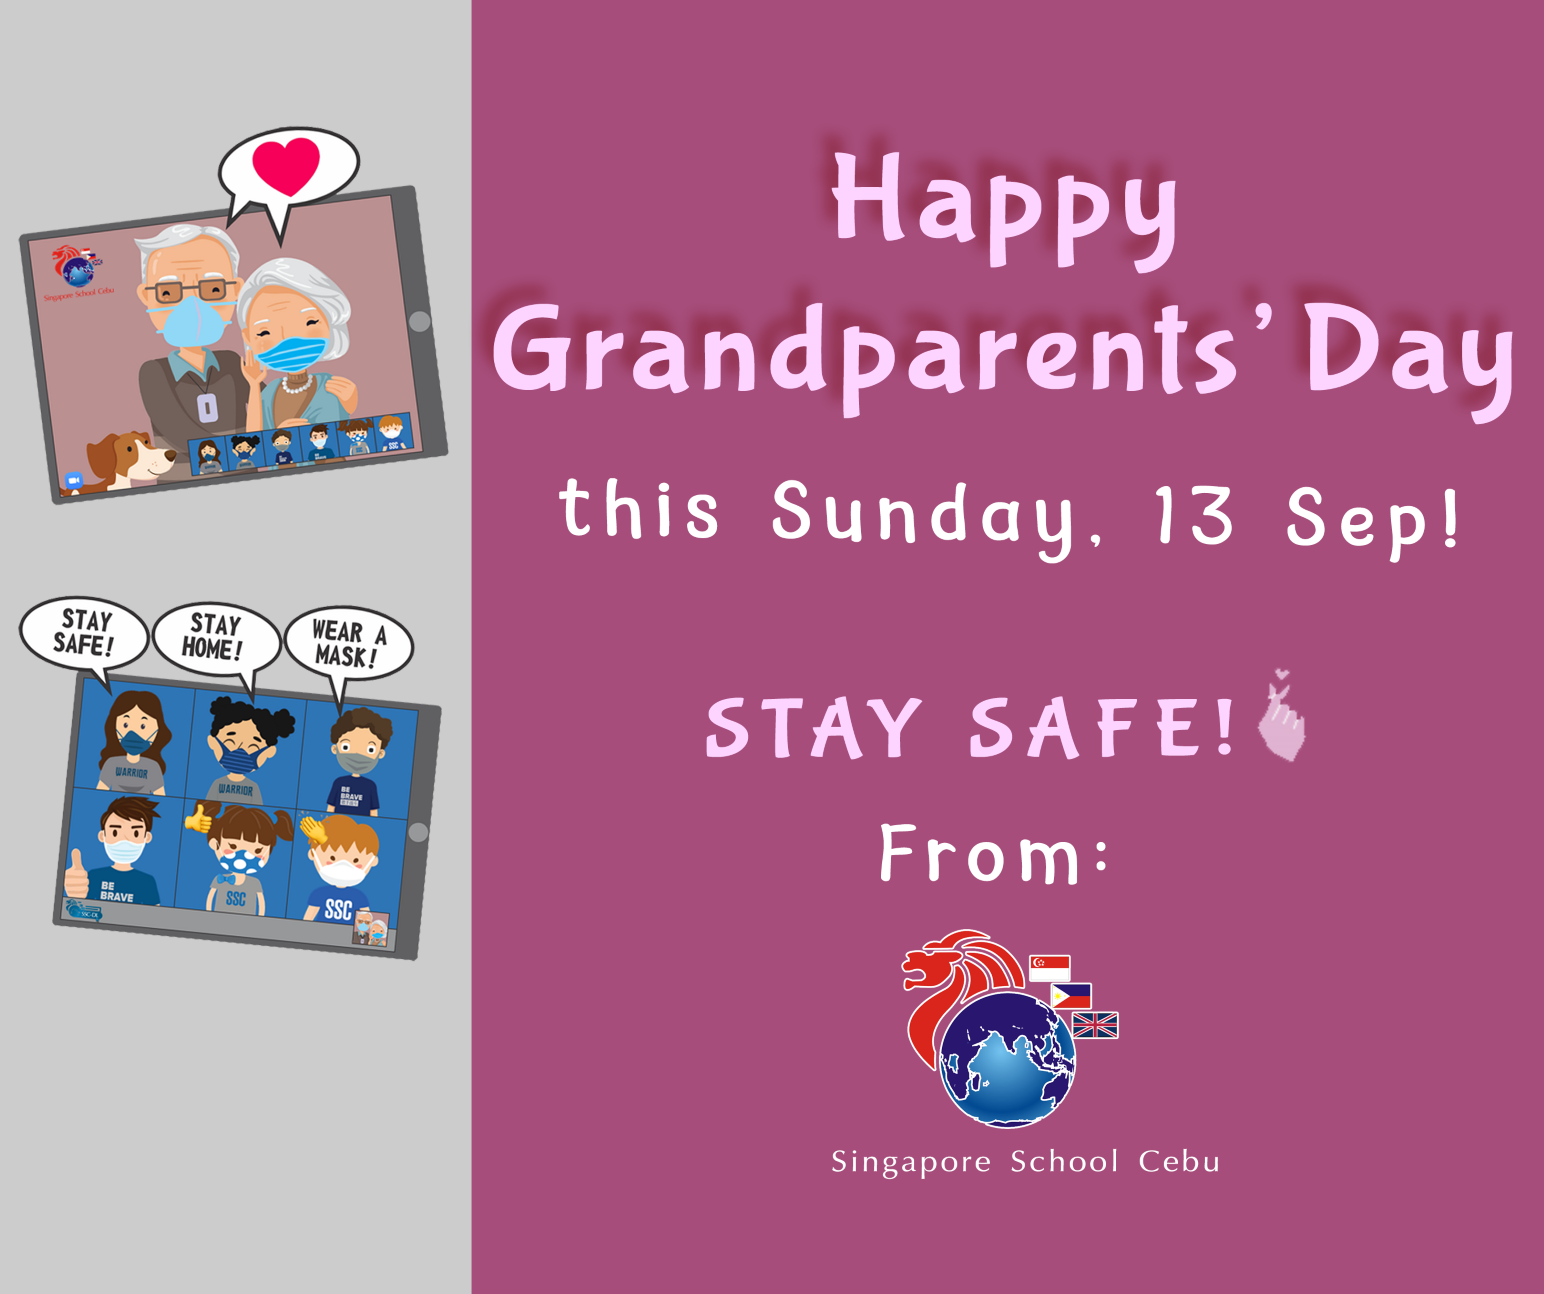 Grandparents’ Day Singapore School Cebu